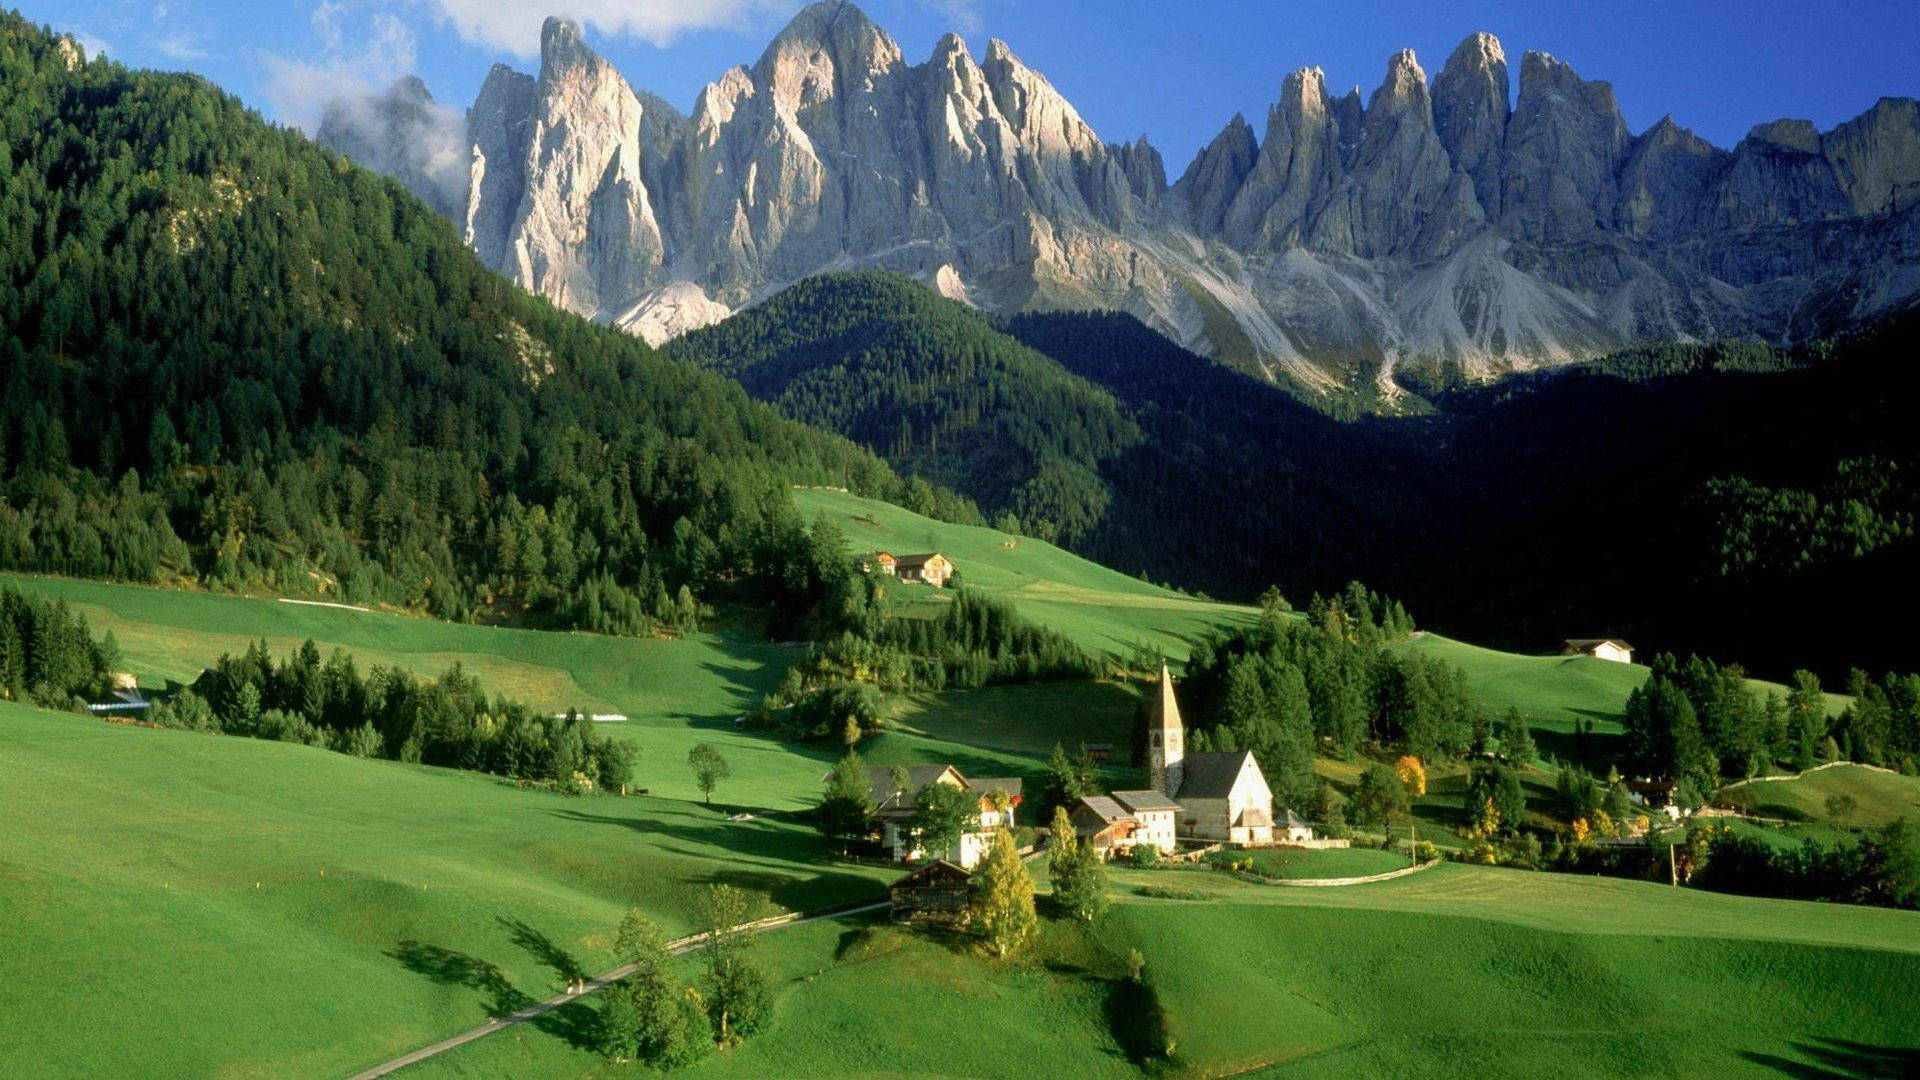 Europe's Picturesque Mountain Range